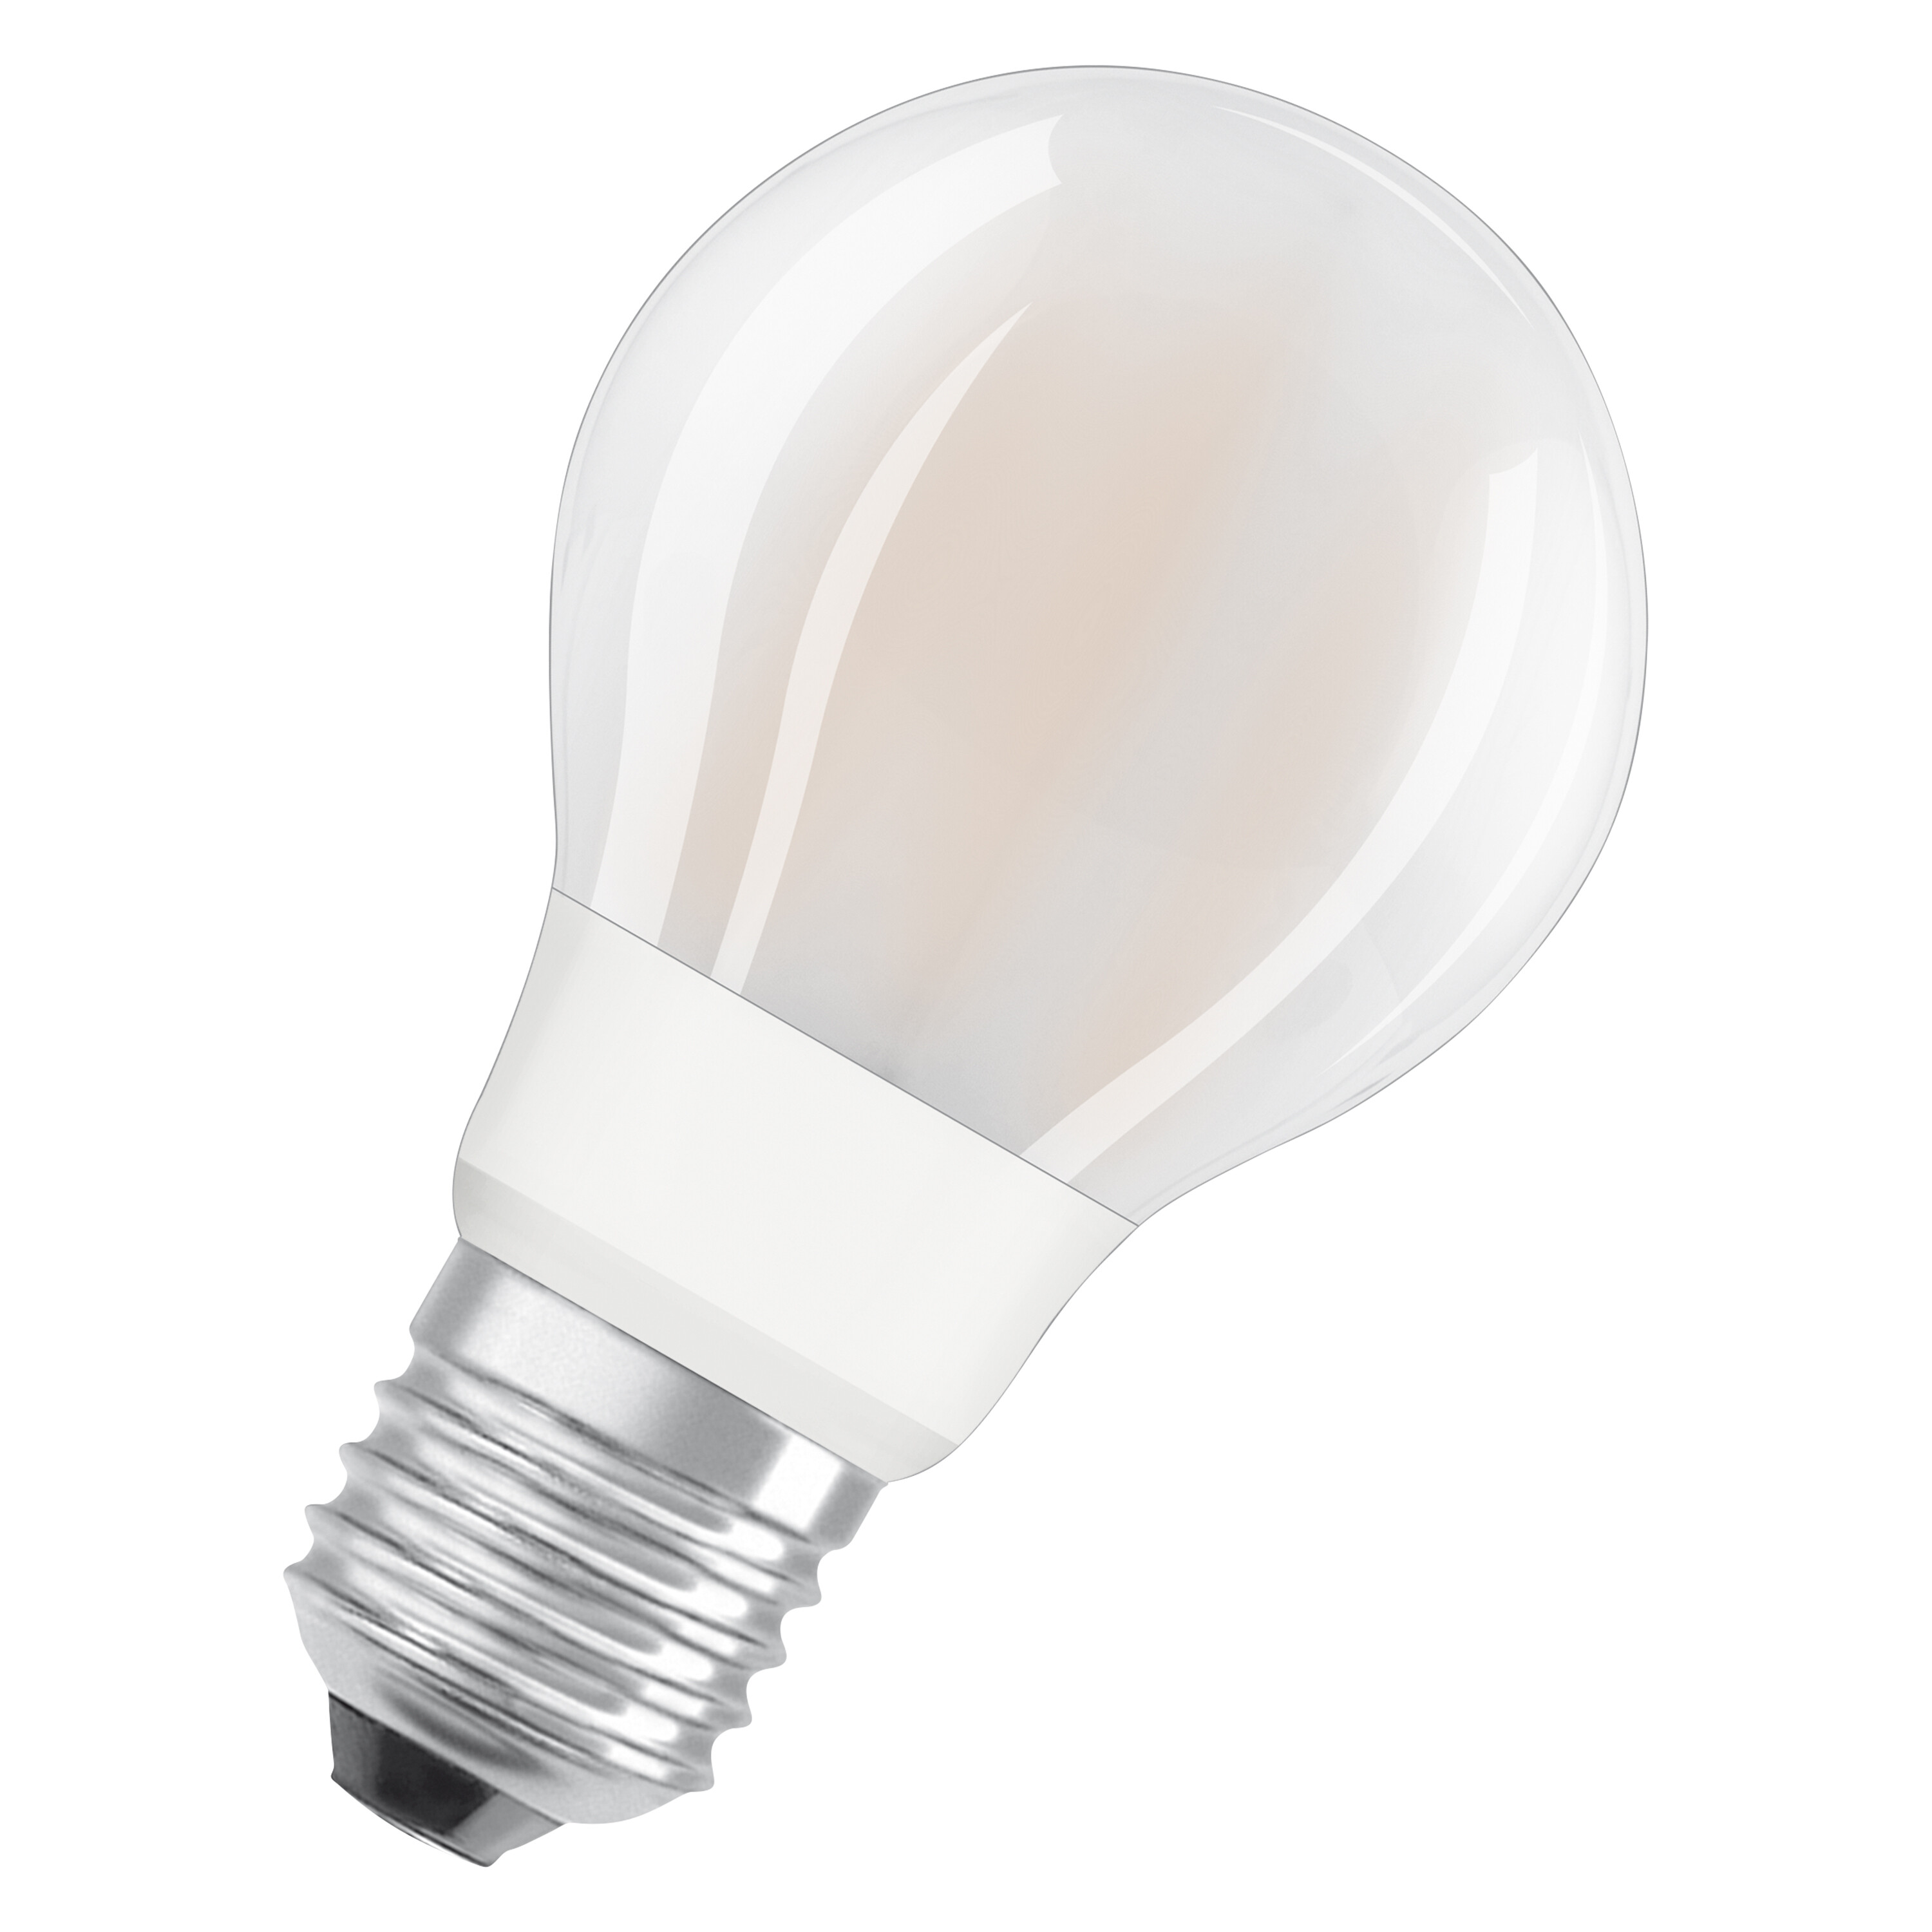 Warmweiß Classic Dimmable Lampe Filament LED LEDVANCE SMART+